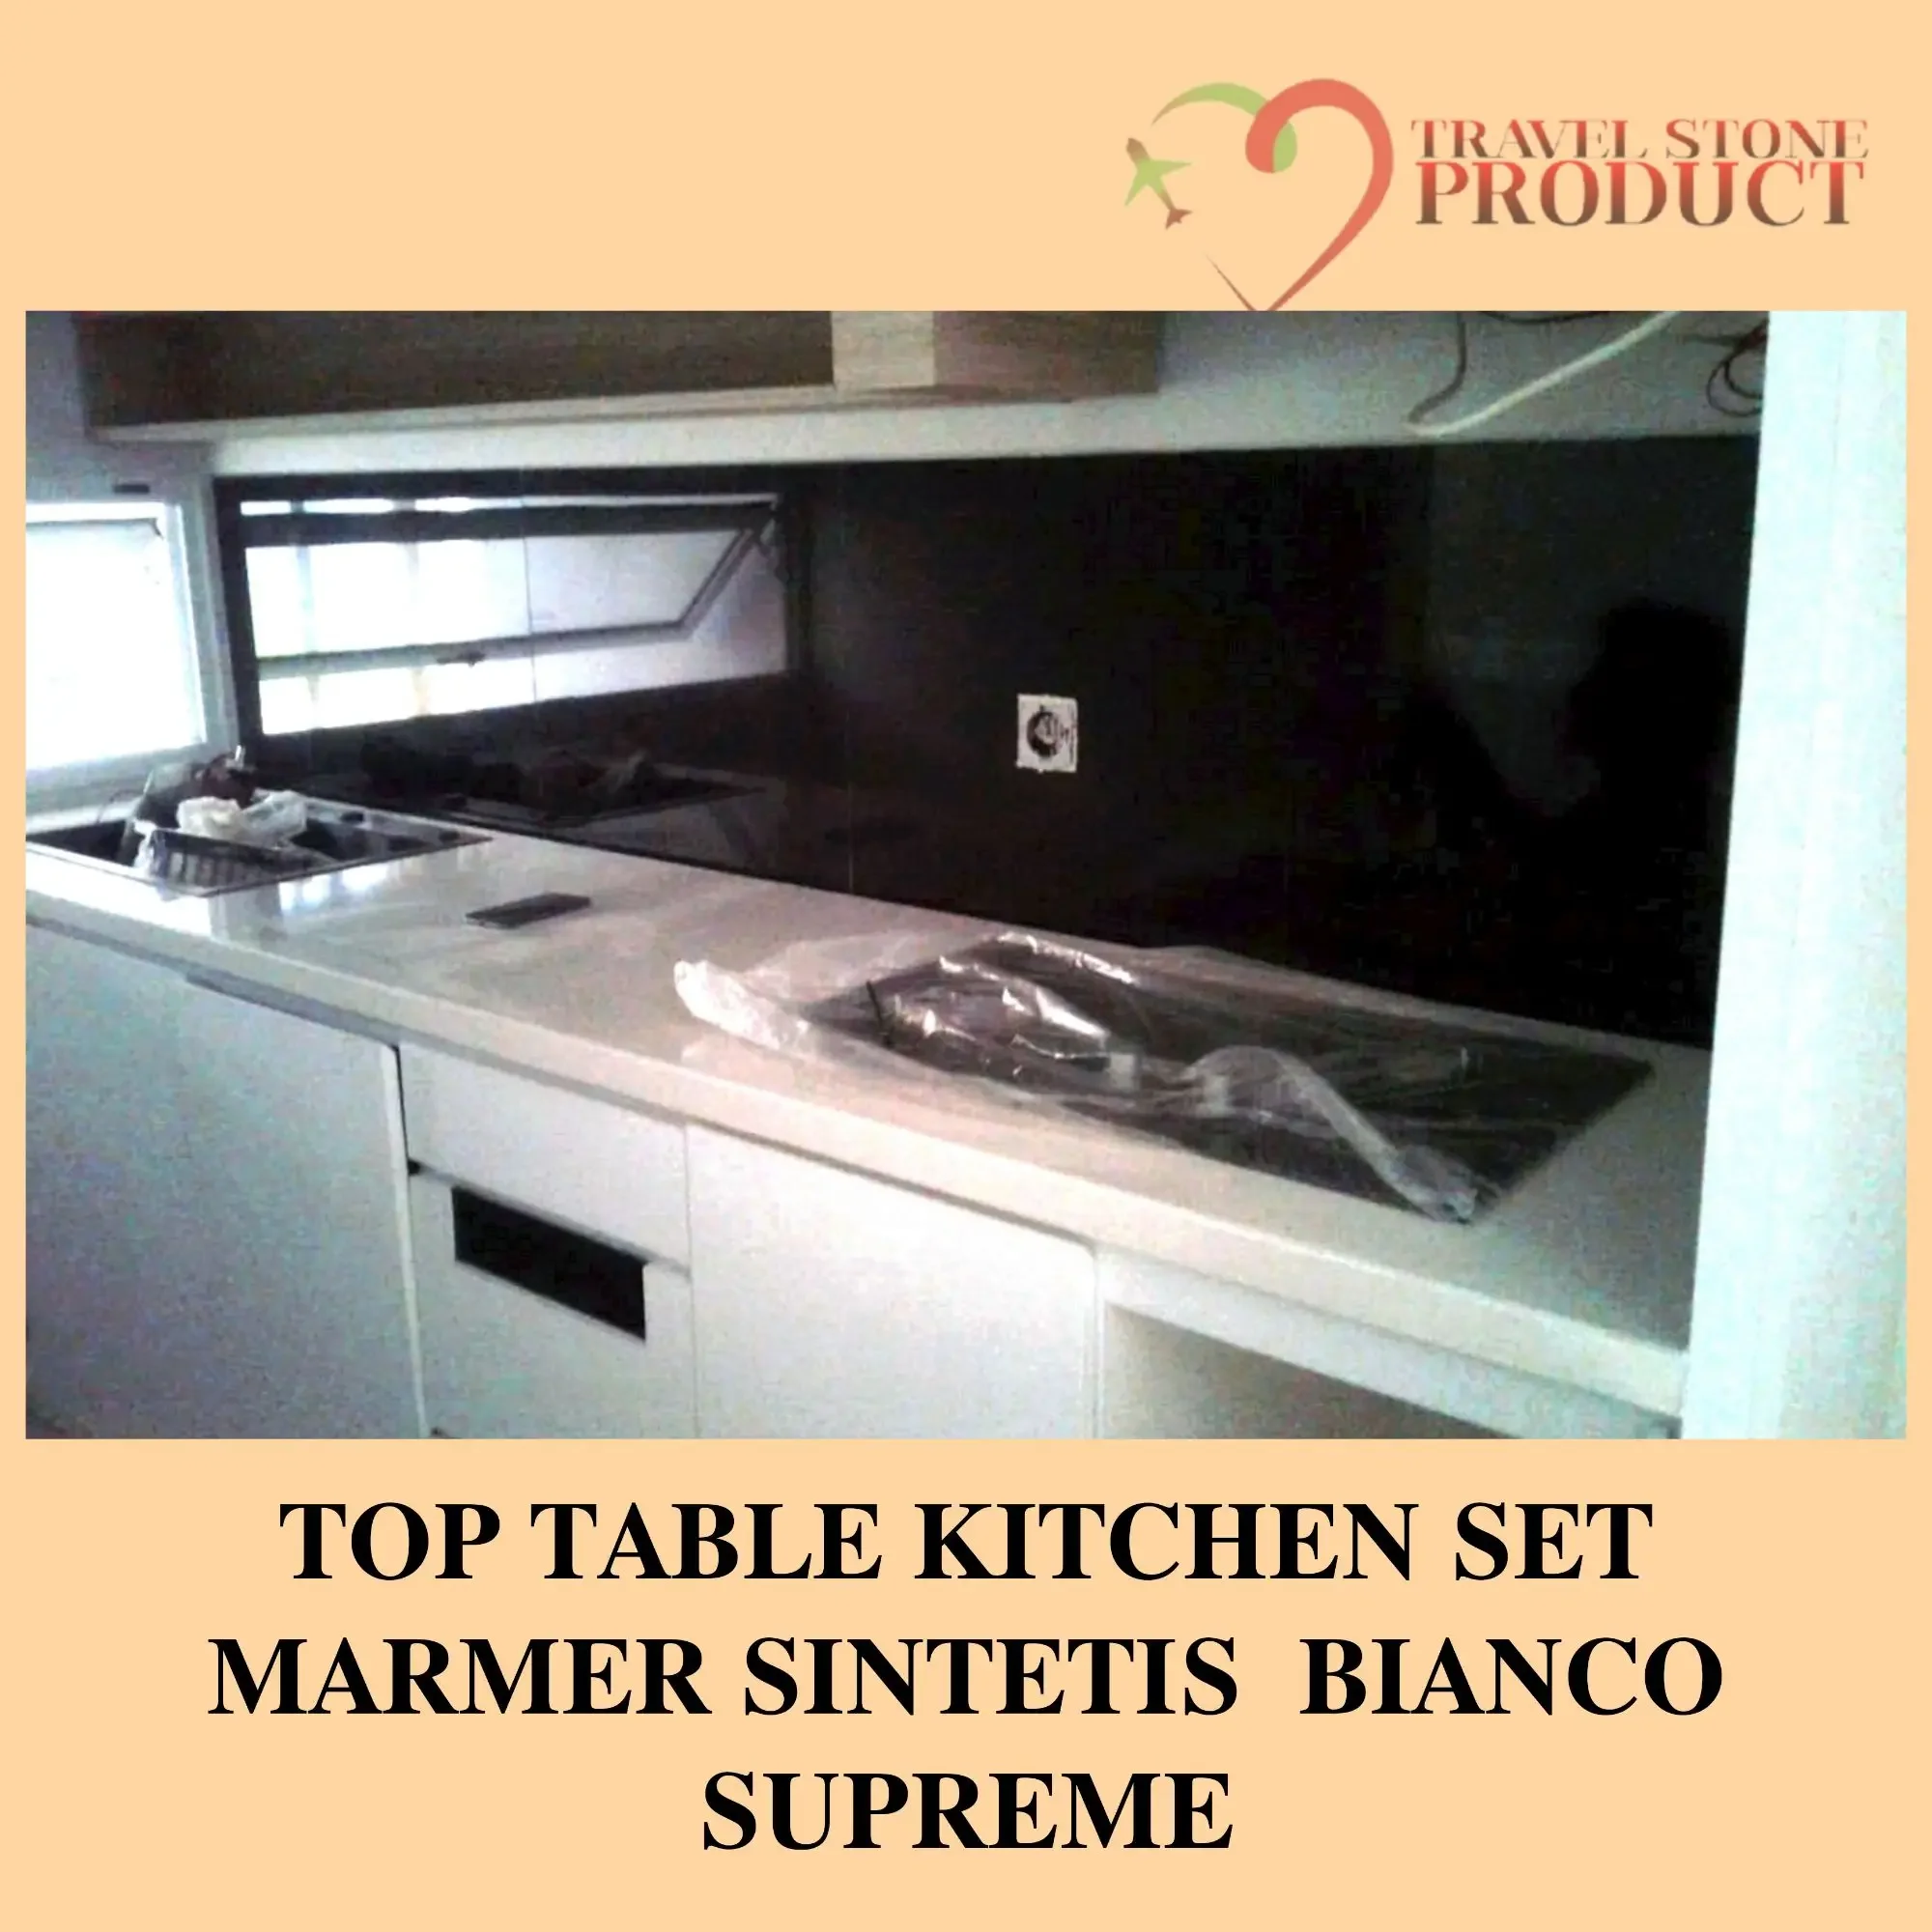 Top table kitchen set marmer sintetis bianco supreme